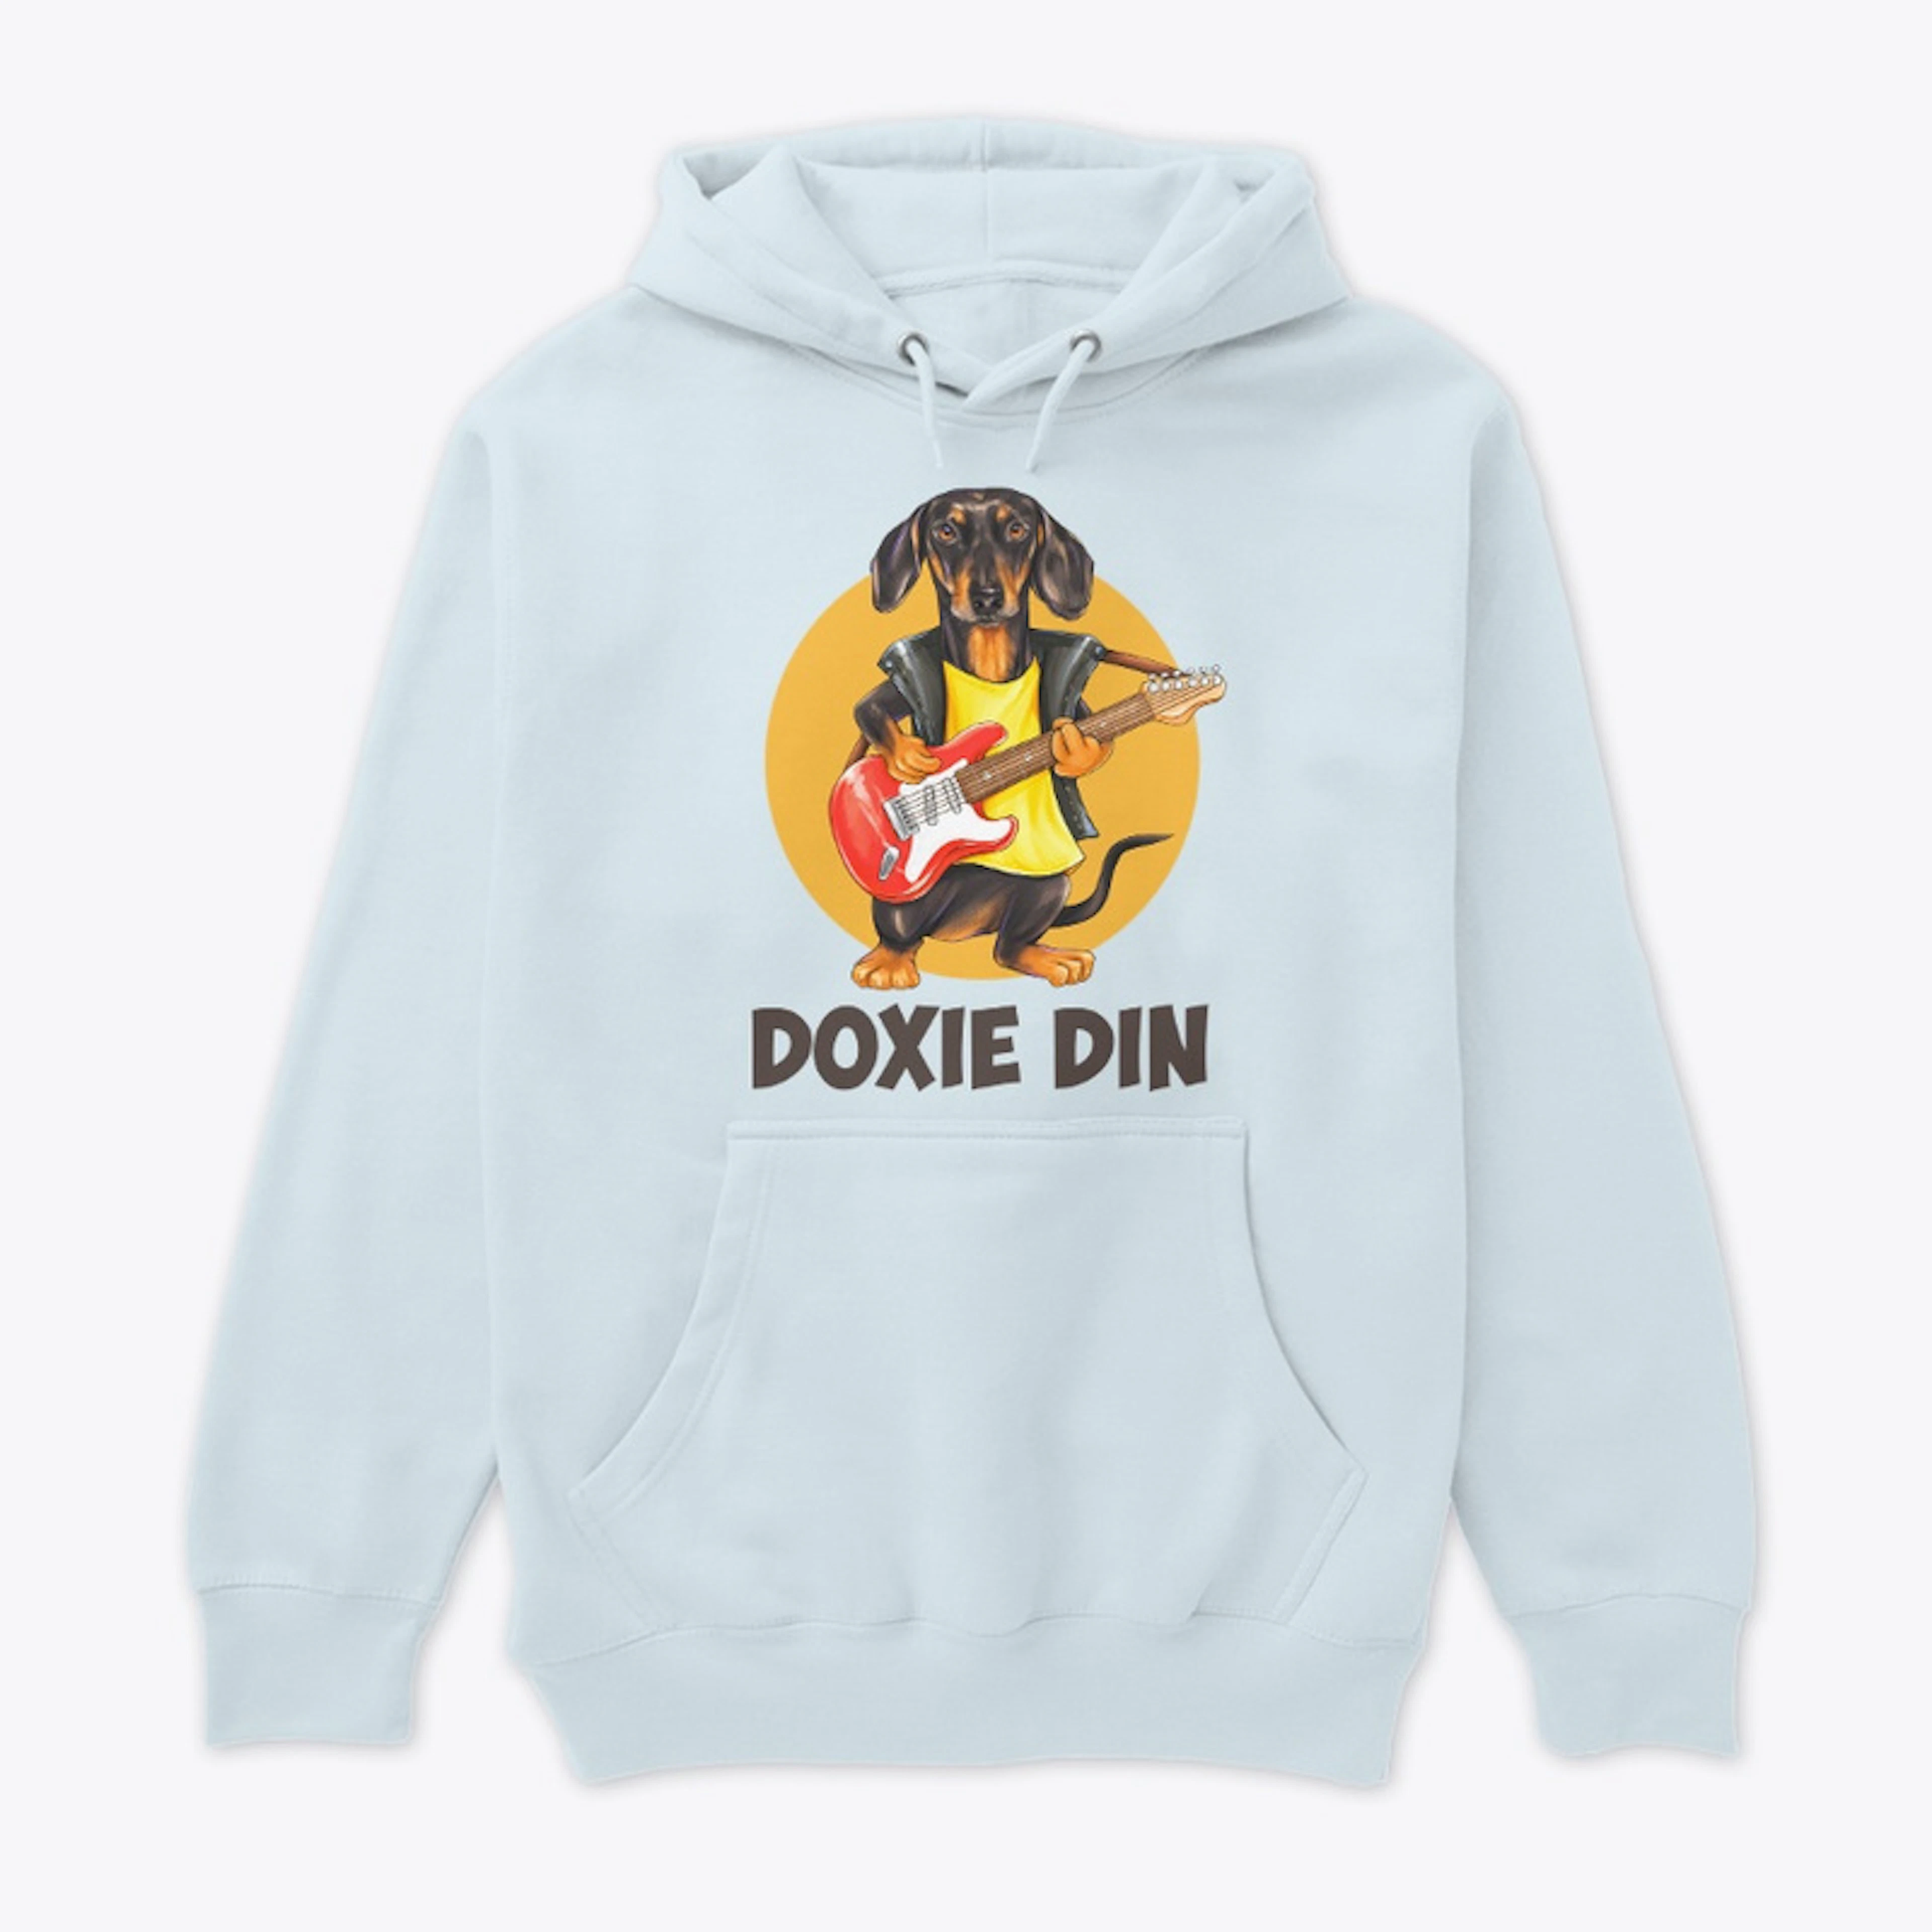 Doxie Rock - Doxie Din